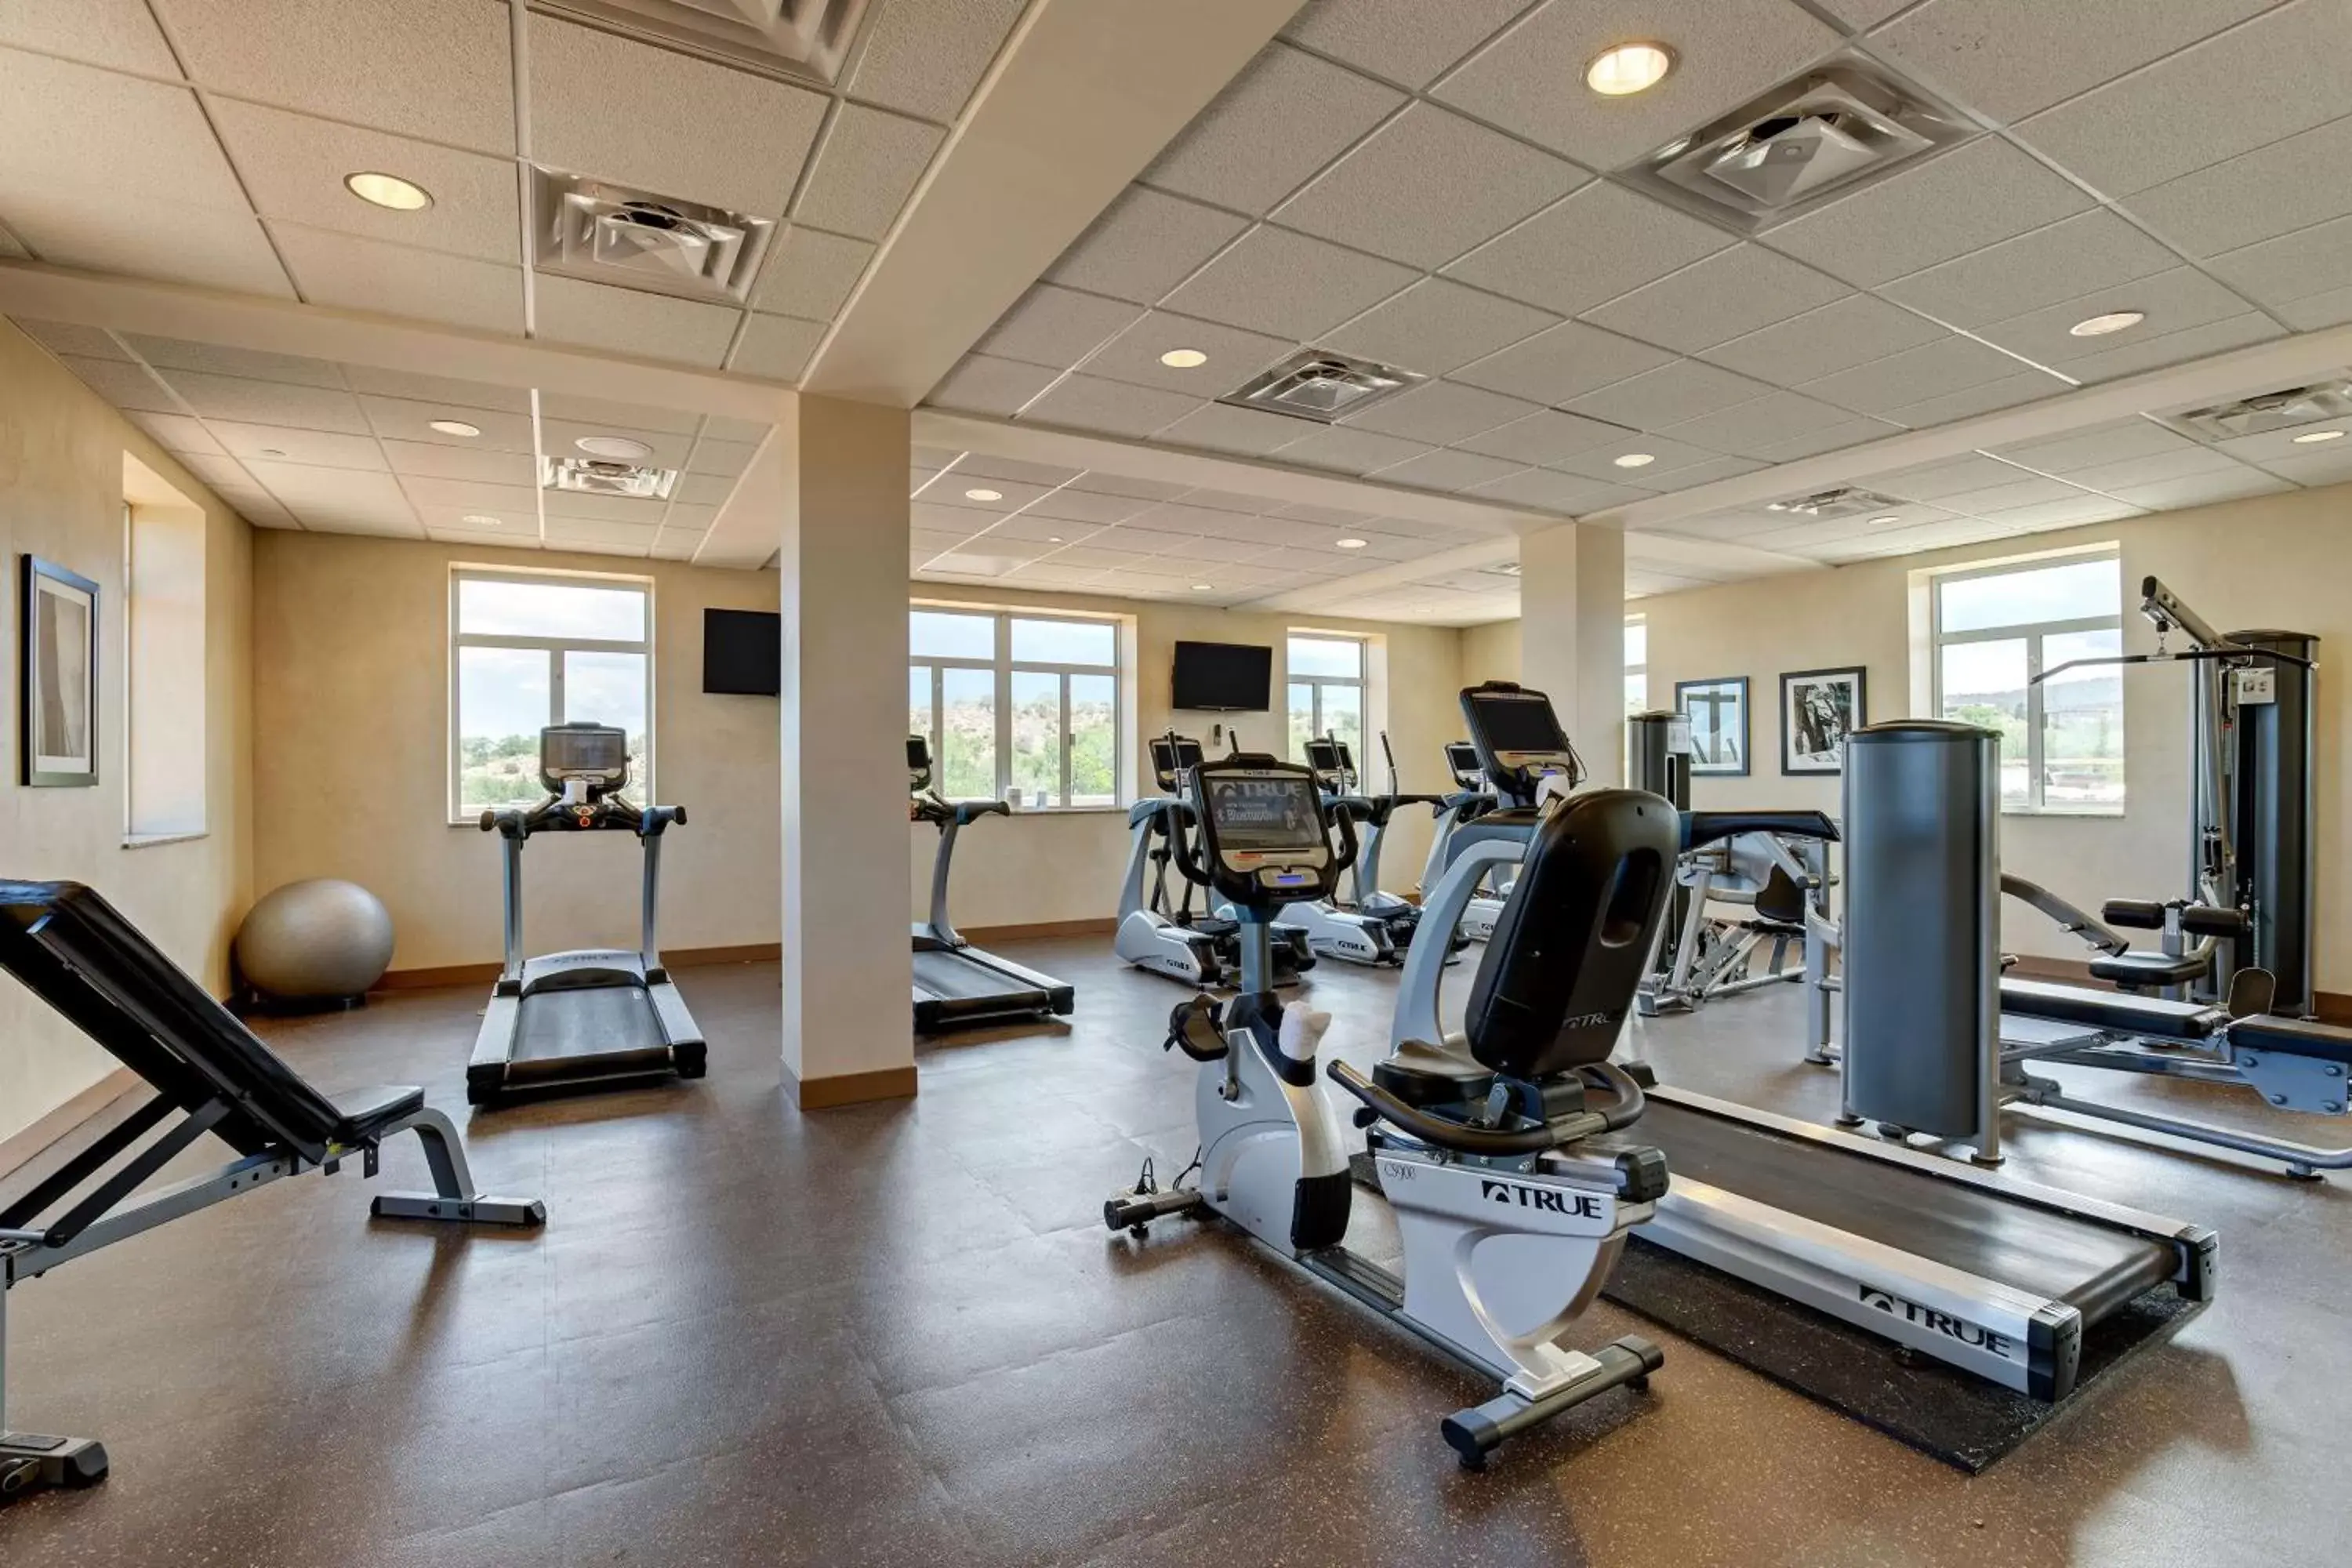 Fitness centre/facilities, Fitness Center/Facilities in Drury Plaza Hotel in Santa Fe